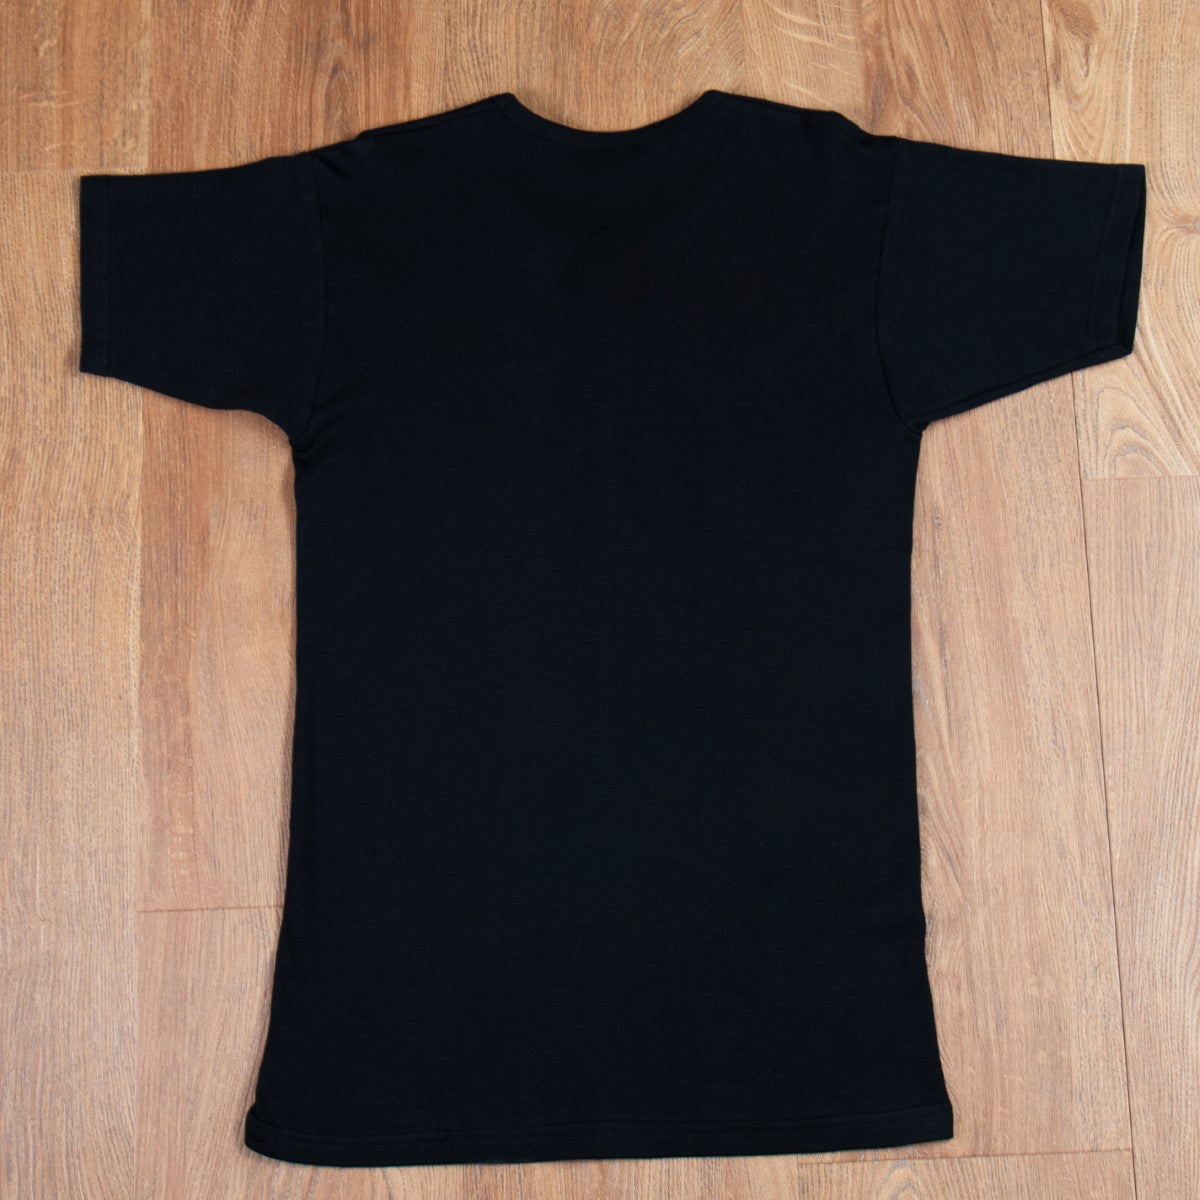 1947 Round Neck T-Shirt Black 2-Pak